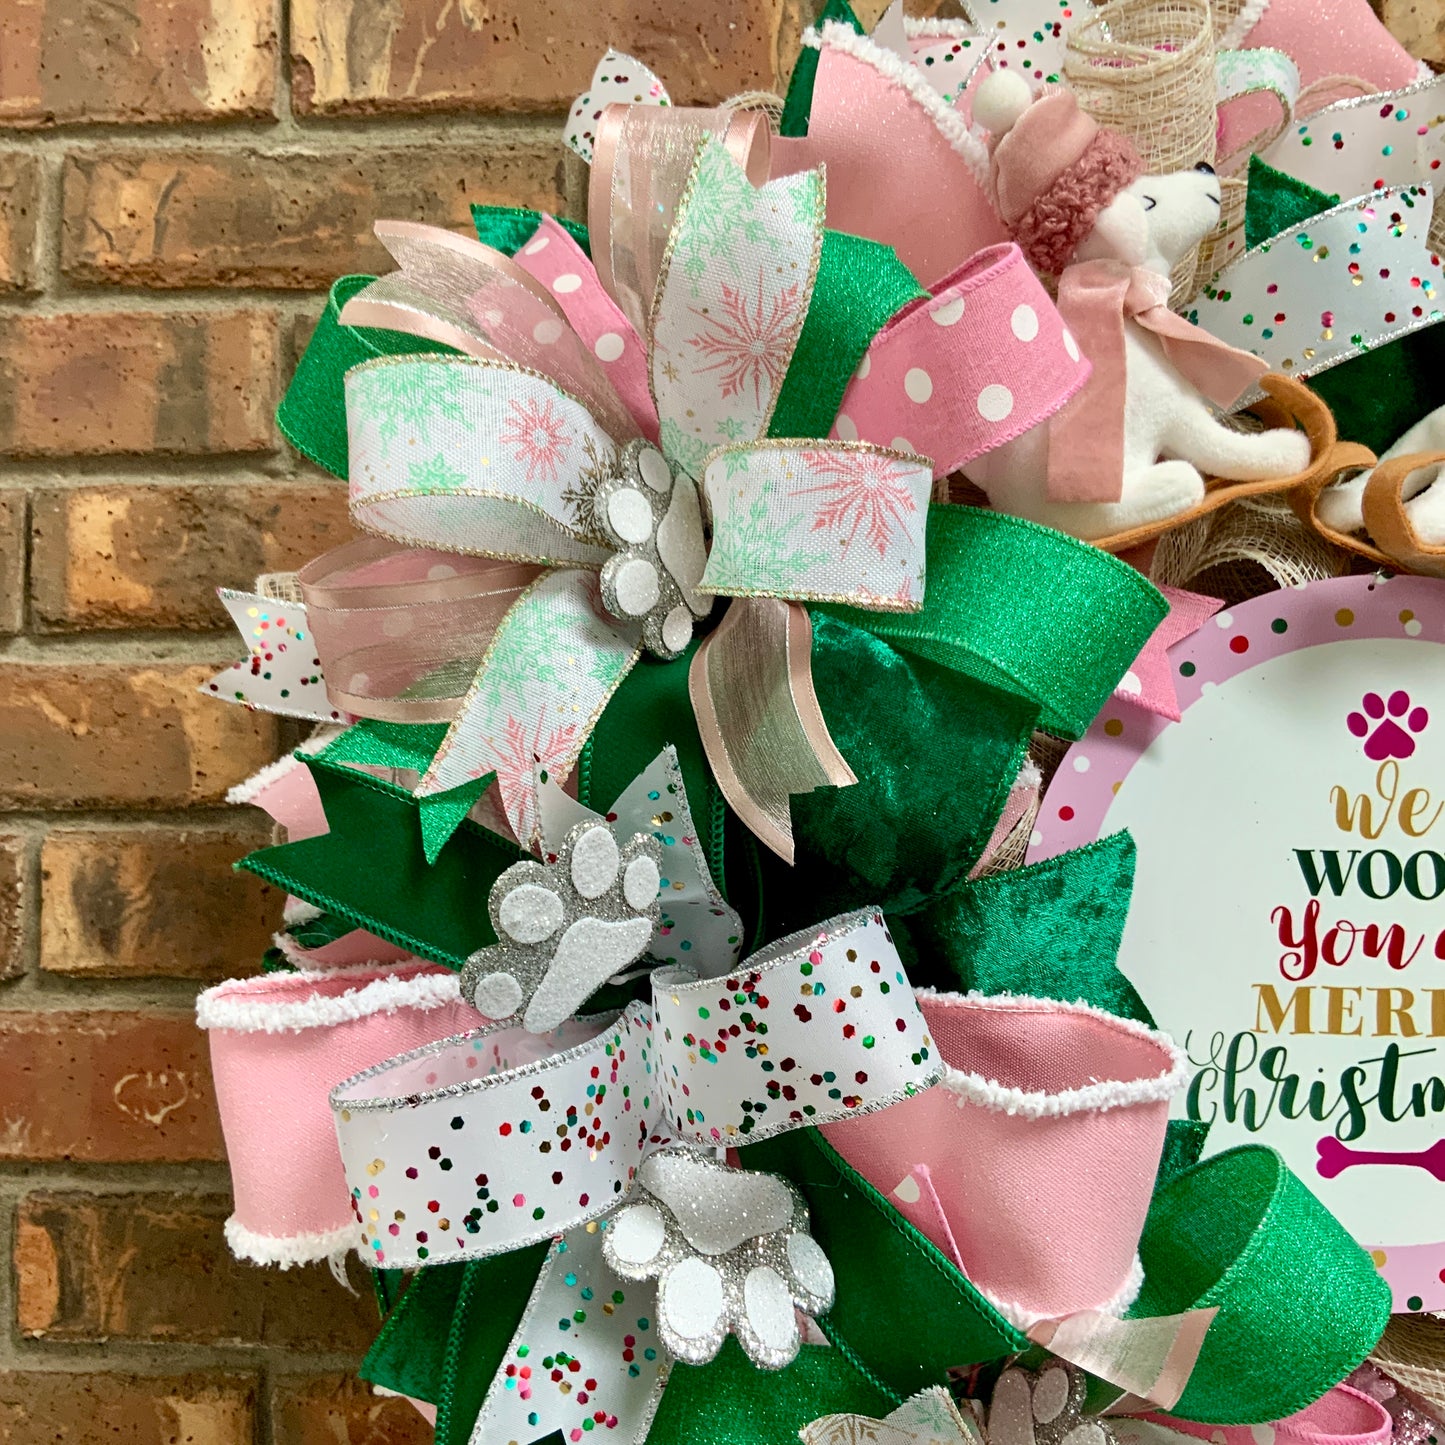 We Woof You A Merry Christmas, Christmas Dog Wreath, Holiday Dog Wreath, Christmas Pet Wreath, Santa Paws Wreath, Dog Wreath